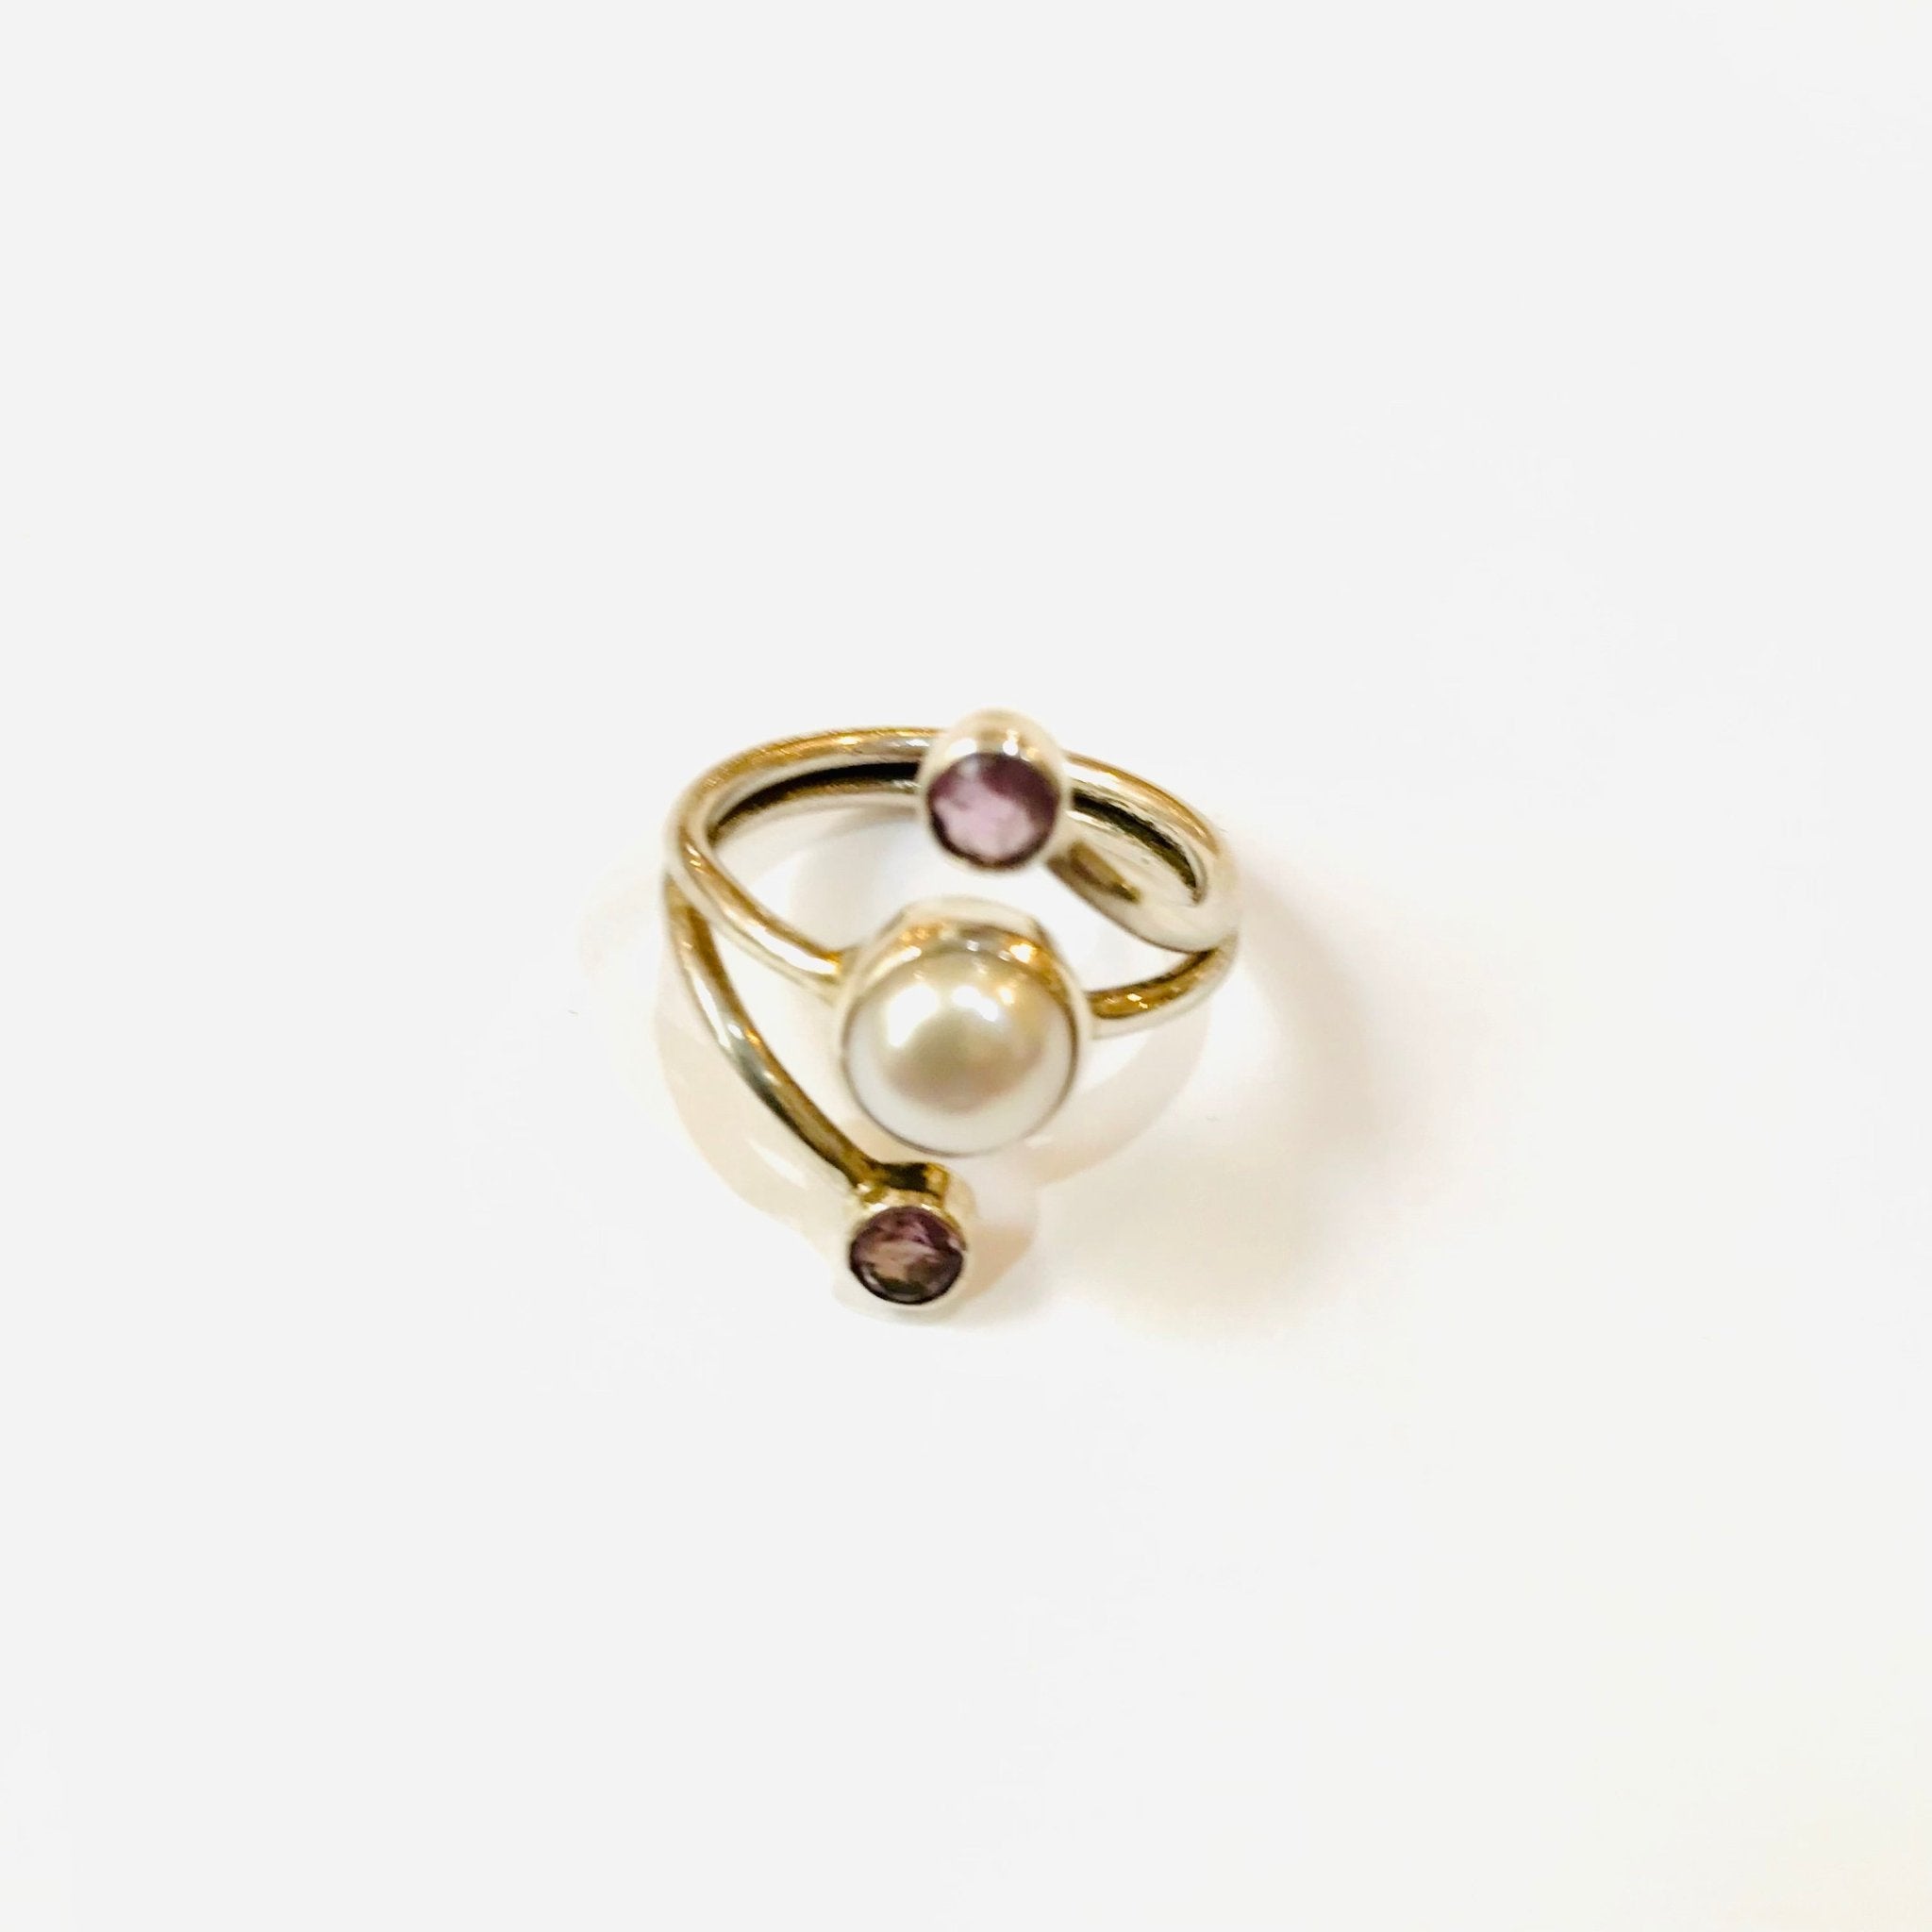 Pearl & Amethyst Ring - The Nancy Smillie Shop - Art, Jewellery & Designer Gifts Glasgow